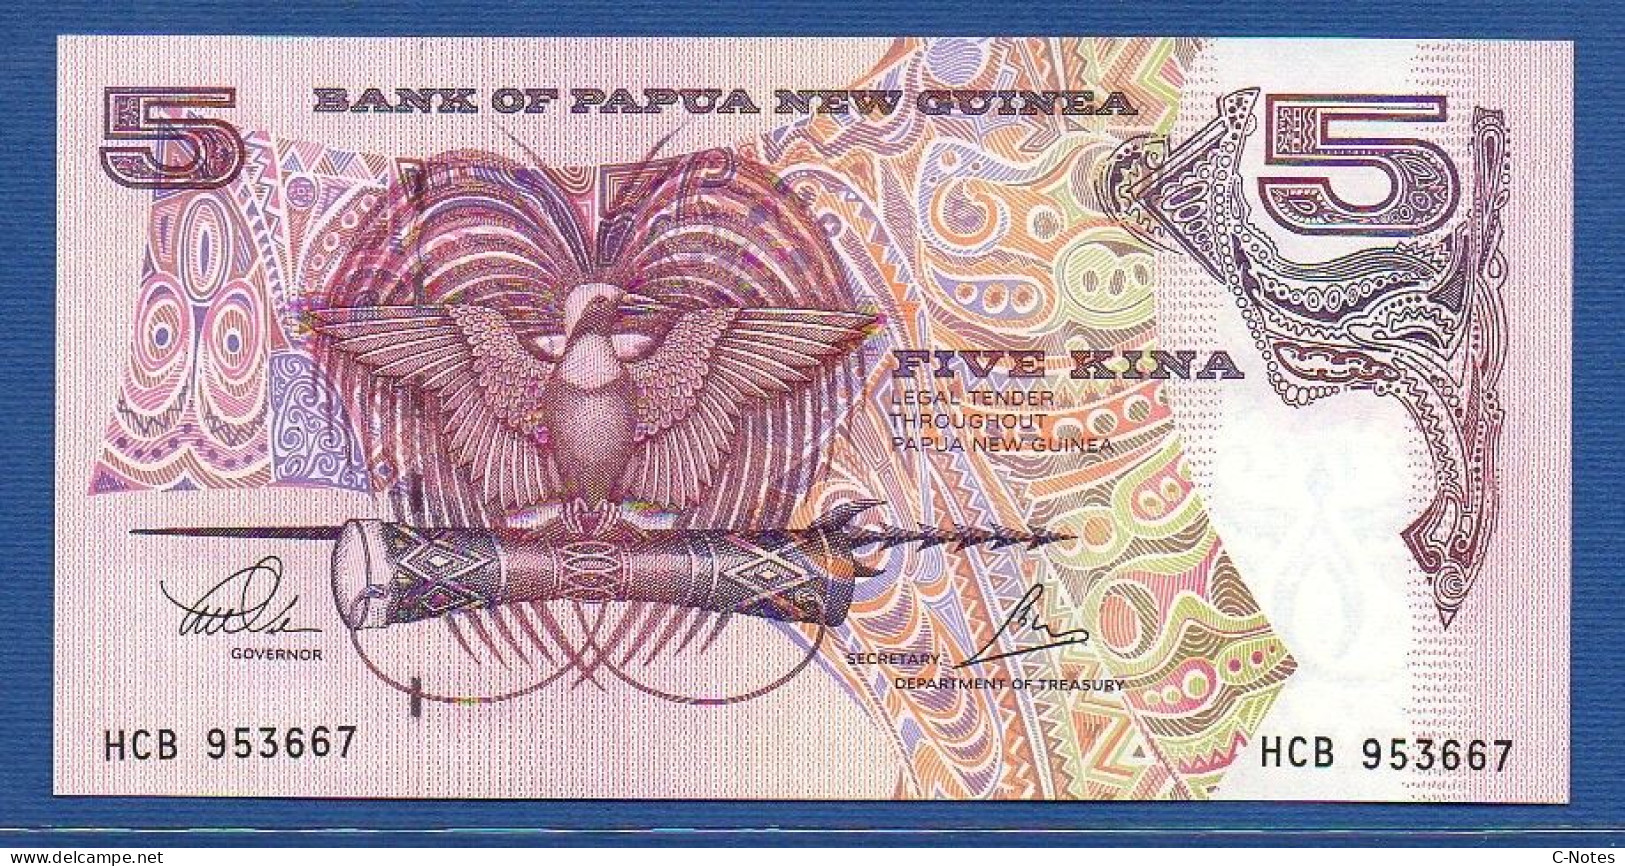 PAPUA NEW GUINEA - P.13c – 5 KINA ND (1999 - 2000) UNC, S/n HCB 953667 - Papouasie-Nouvelle-Guinée